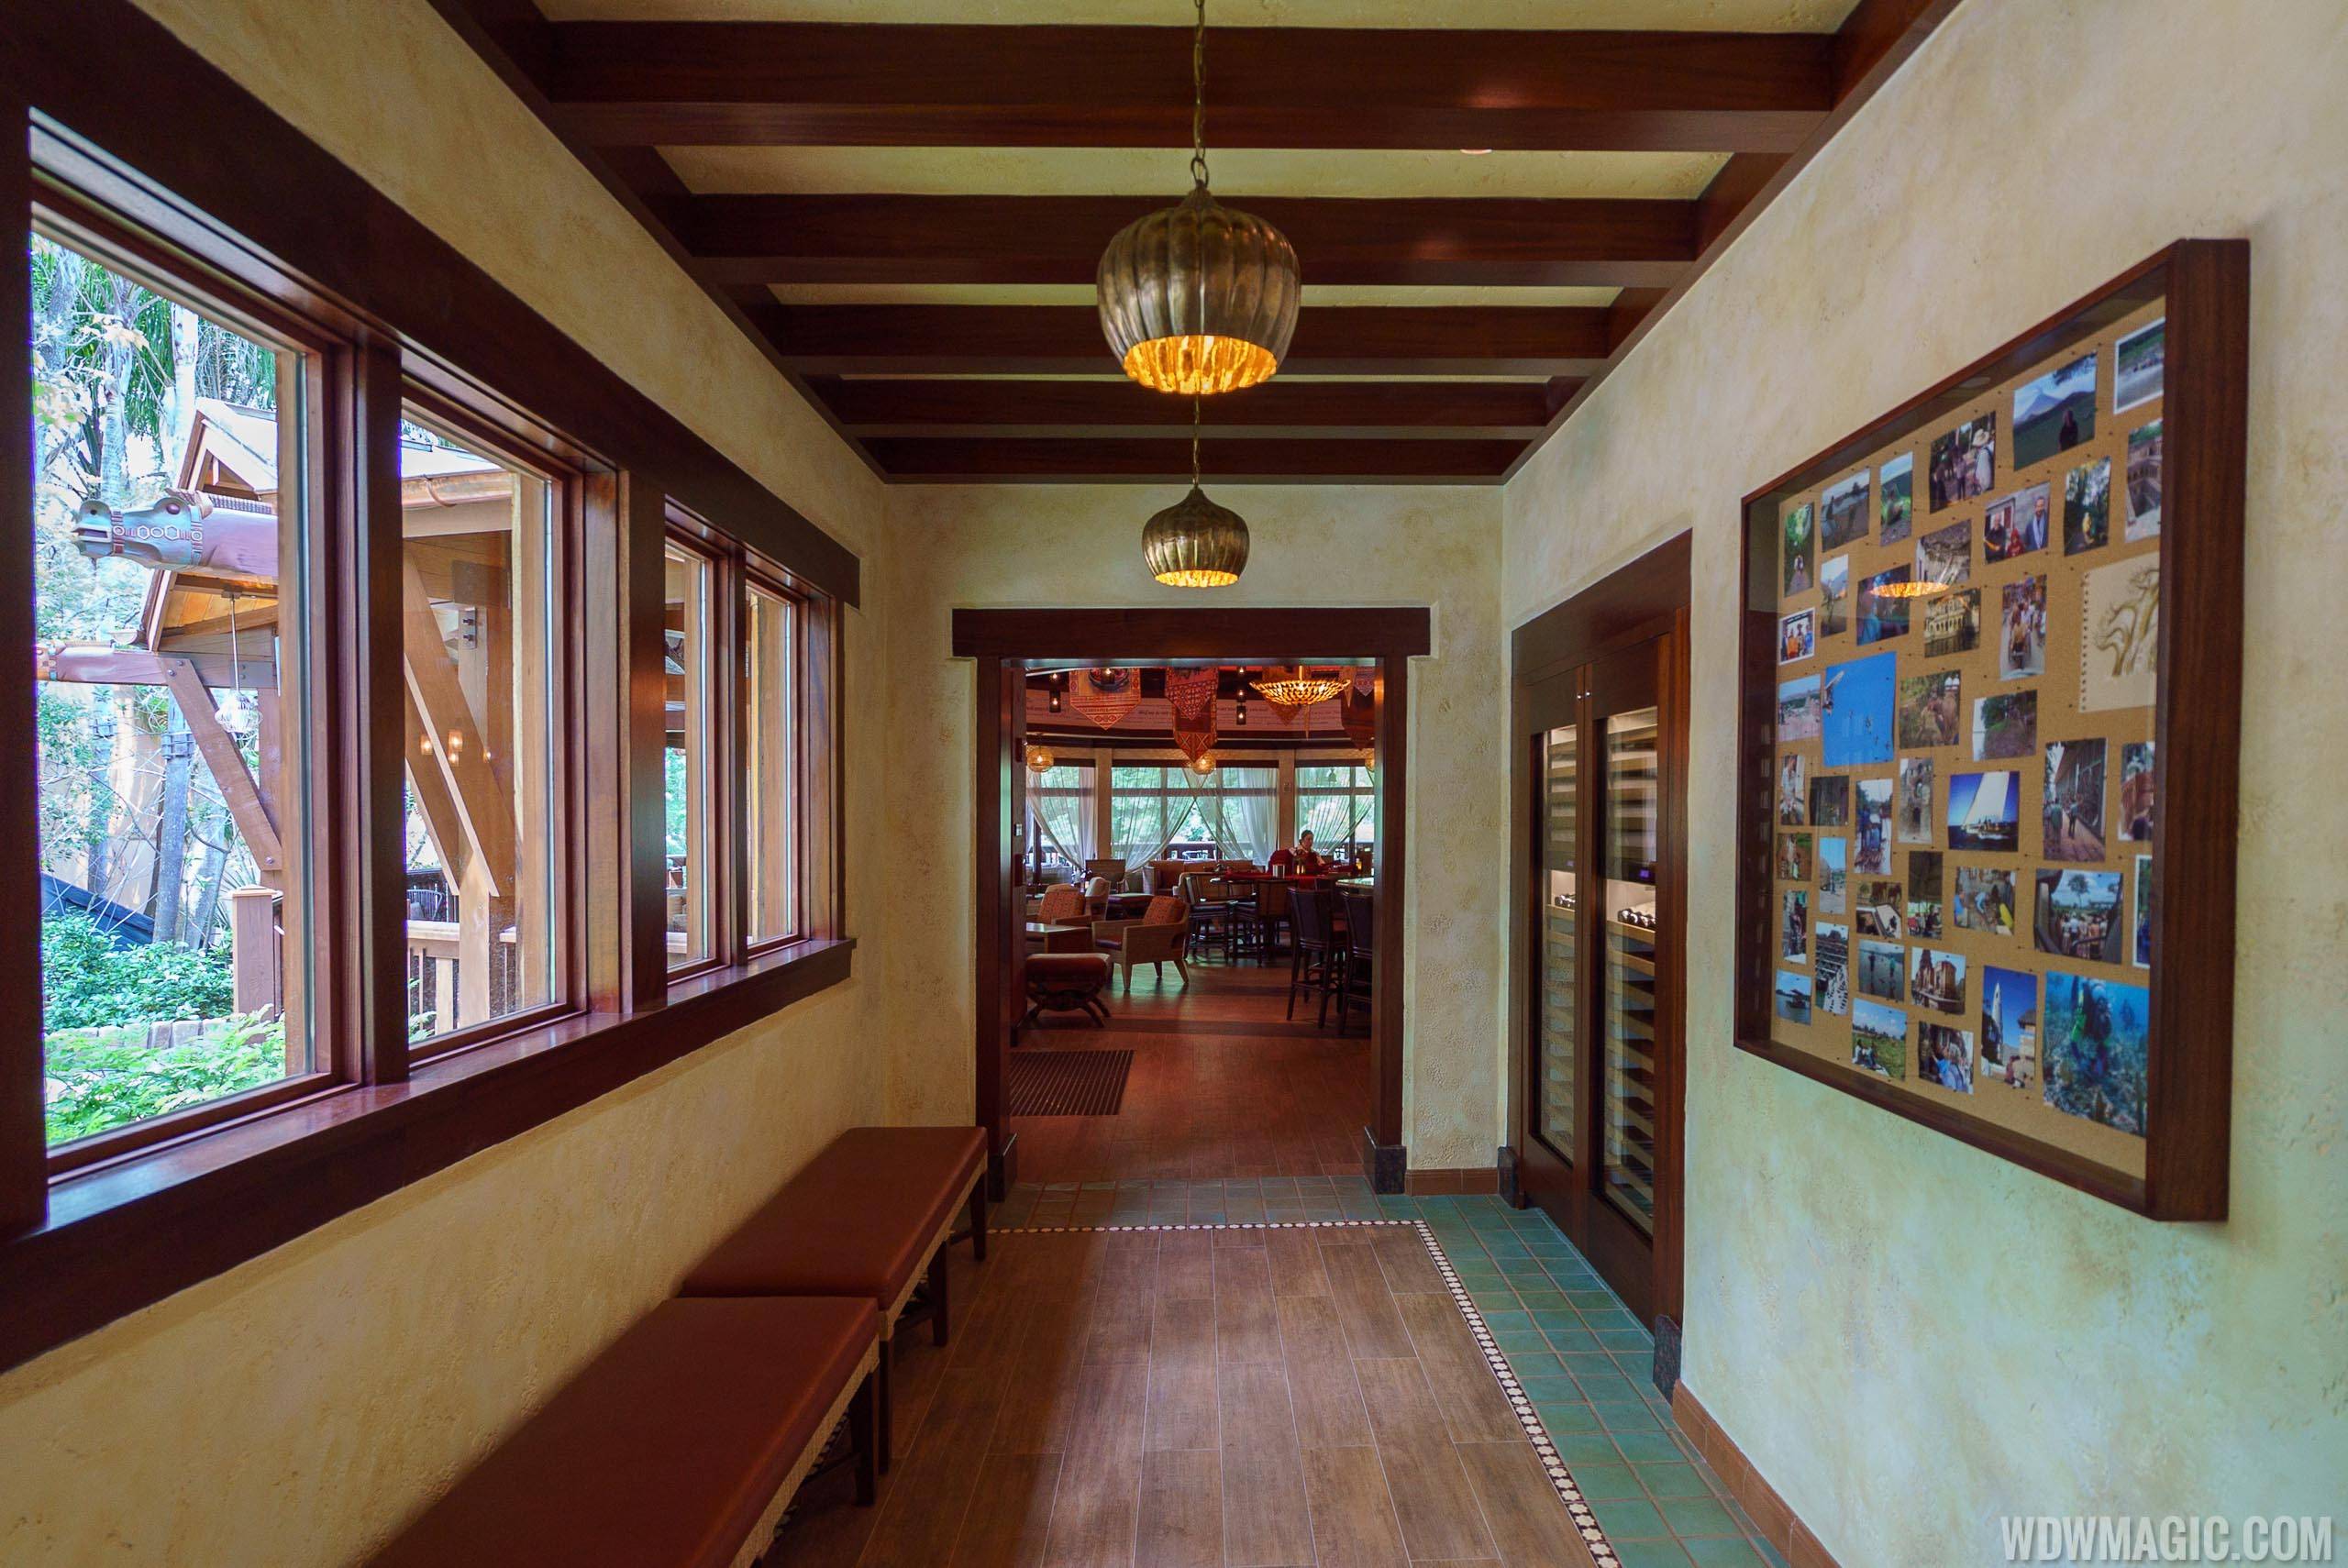 Tiffins - Hallway to Nomad Lounge and Trek Dining Room